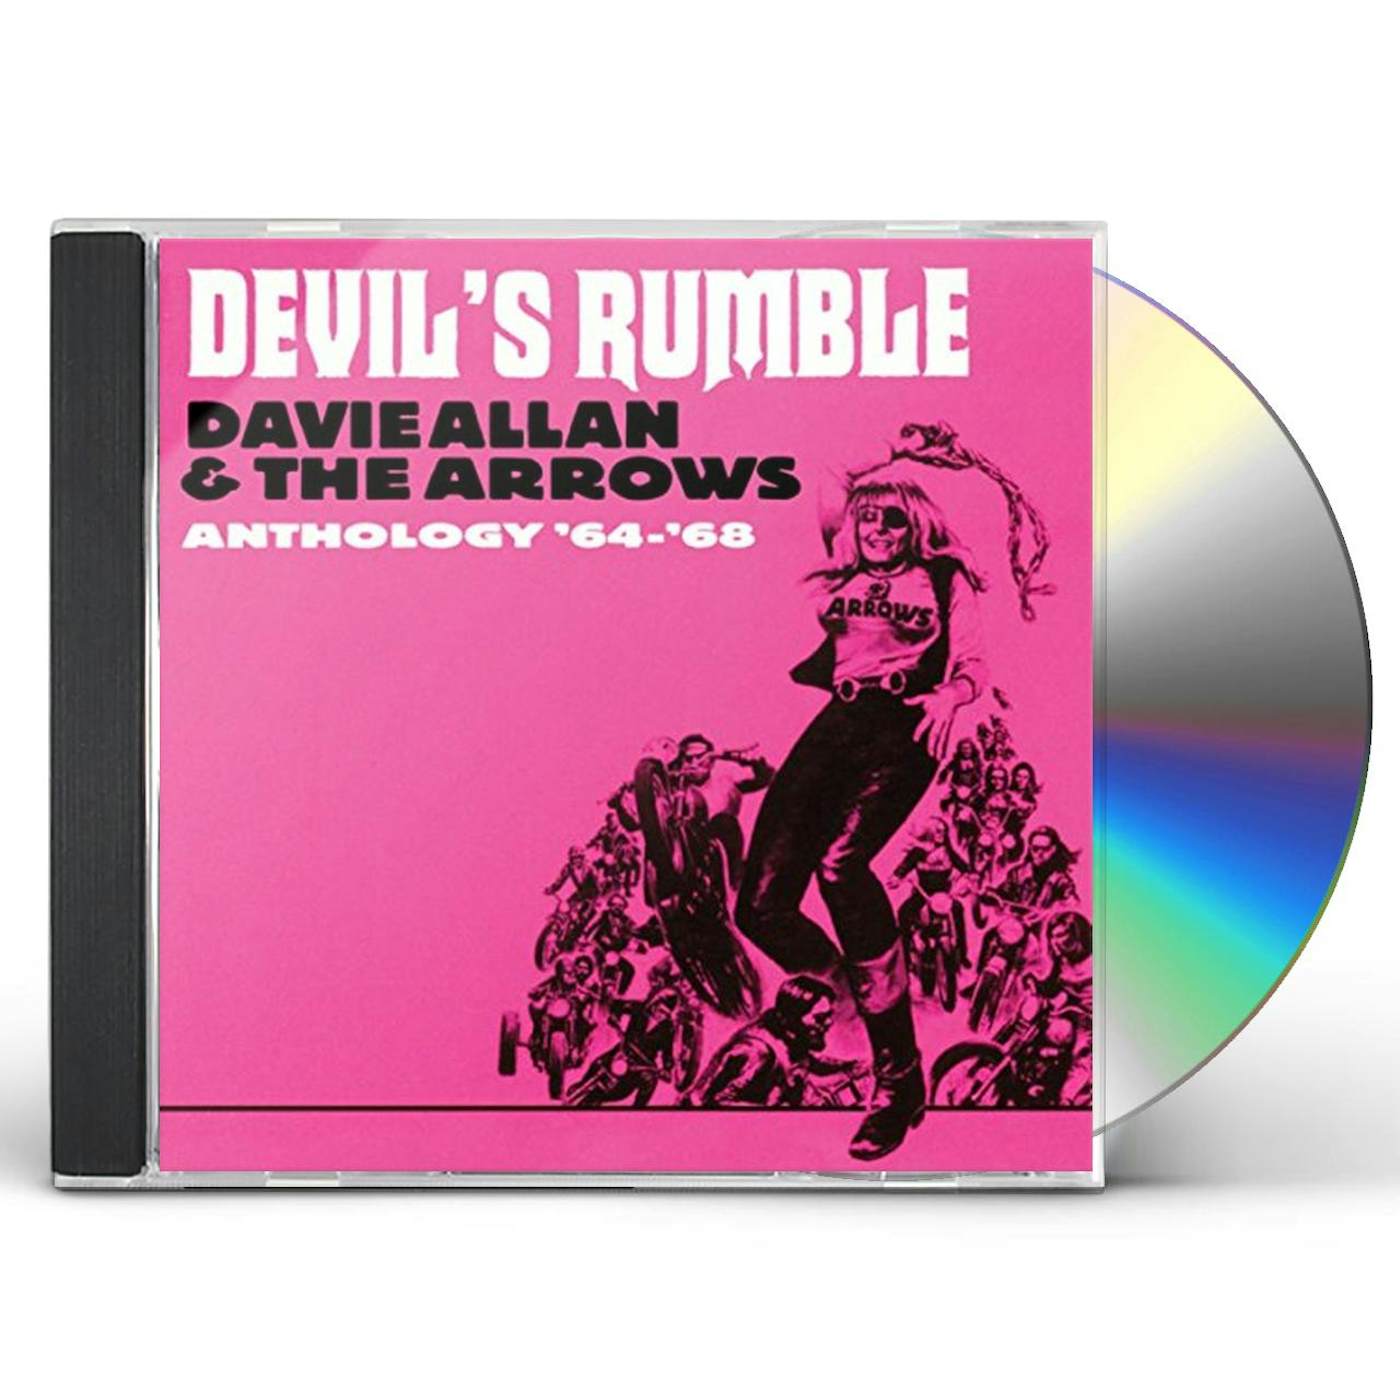 Davie Allan & The Arrows DEVIL'S RUMBLE: ANTHOLOGY 64-68 CD